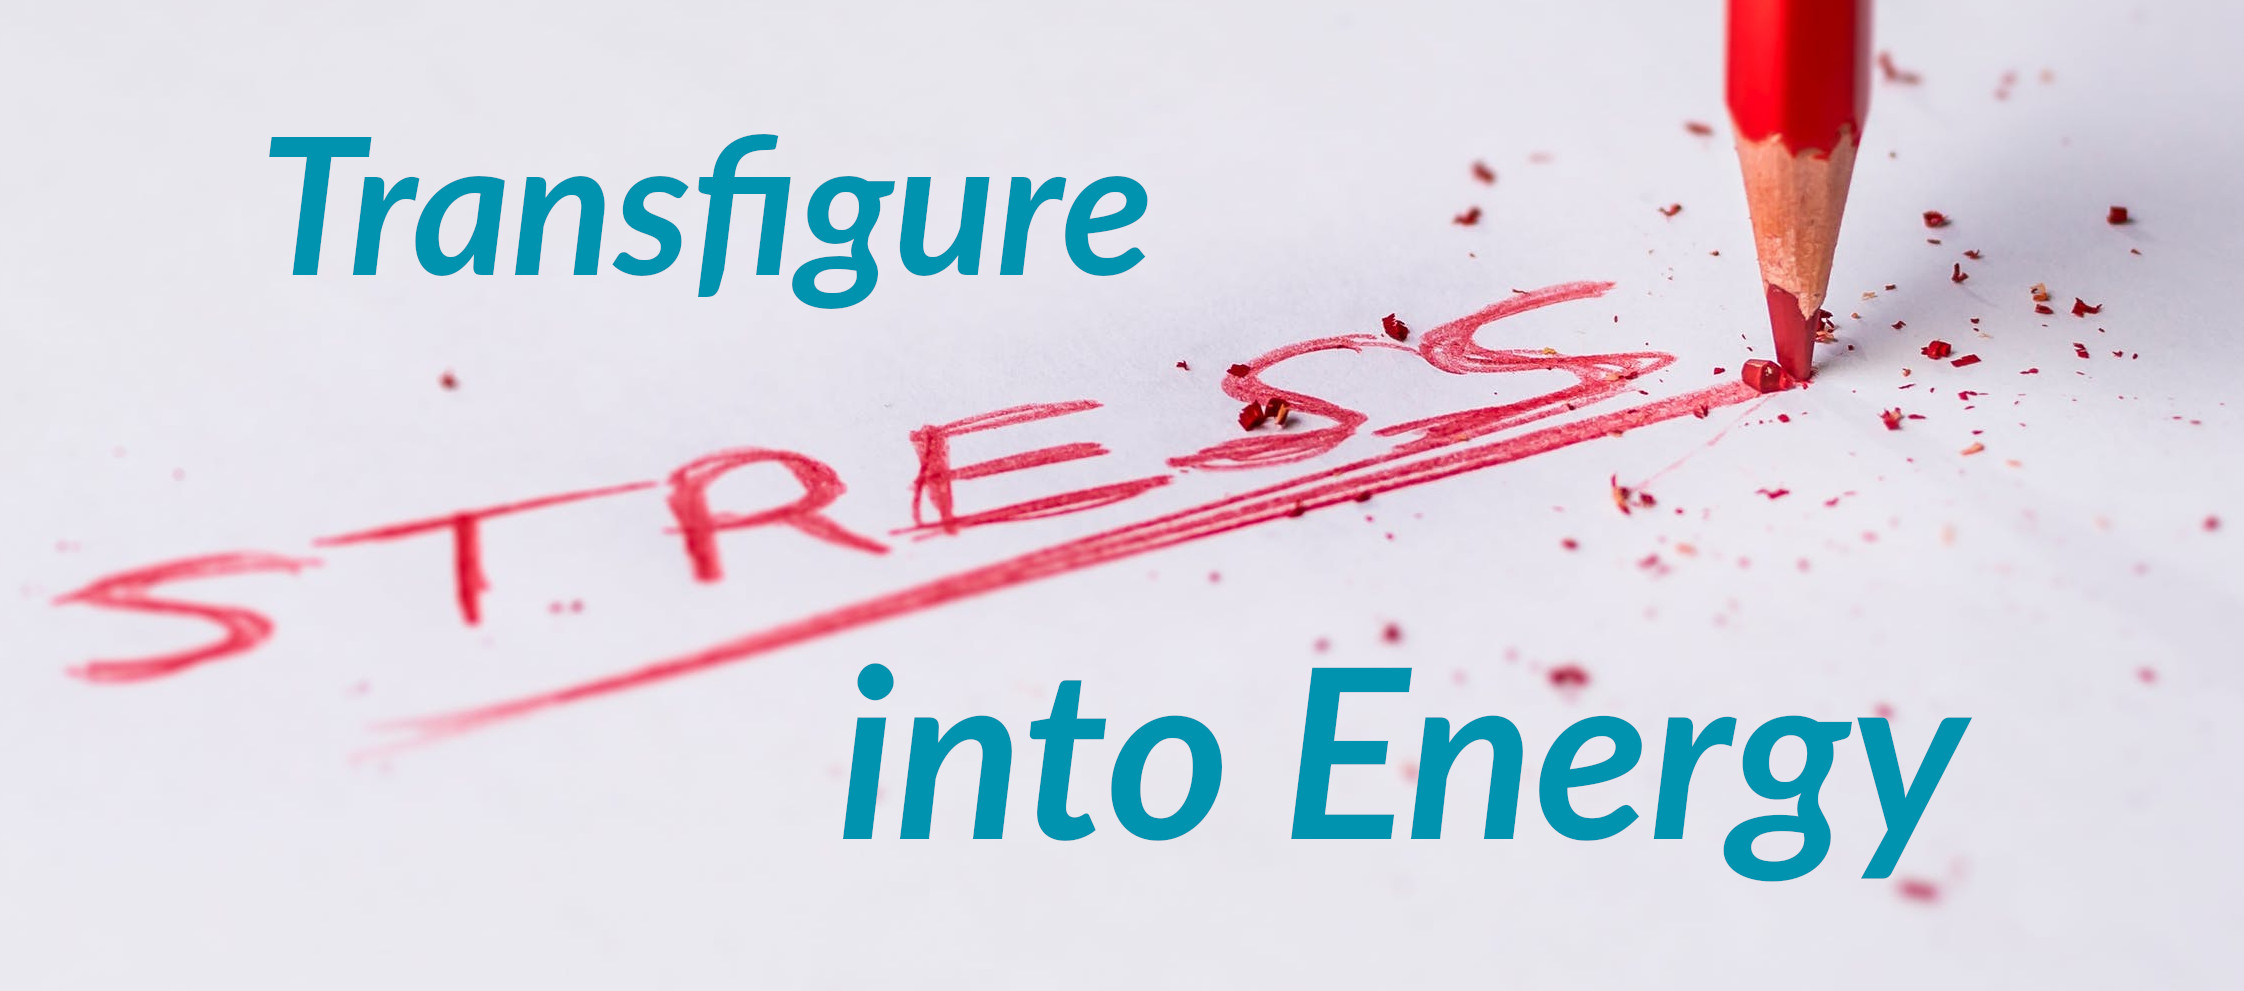 Trasfigure Stress Into Energy